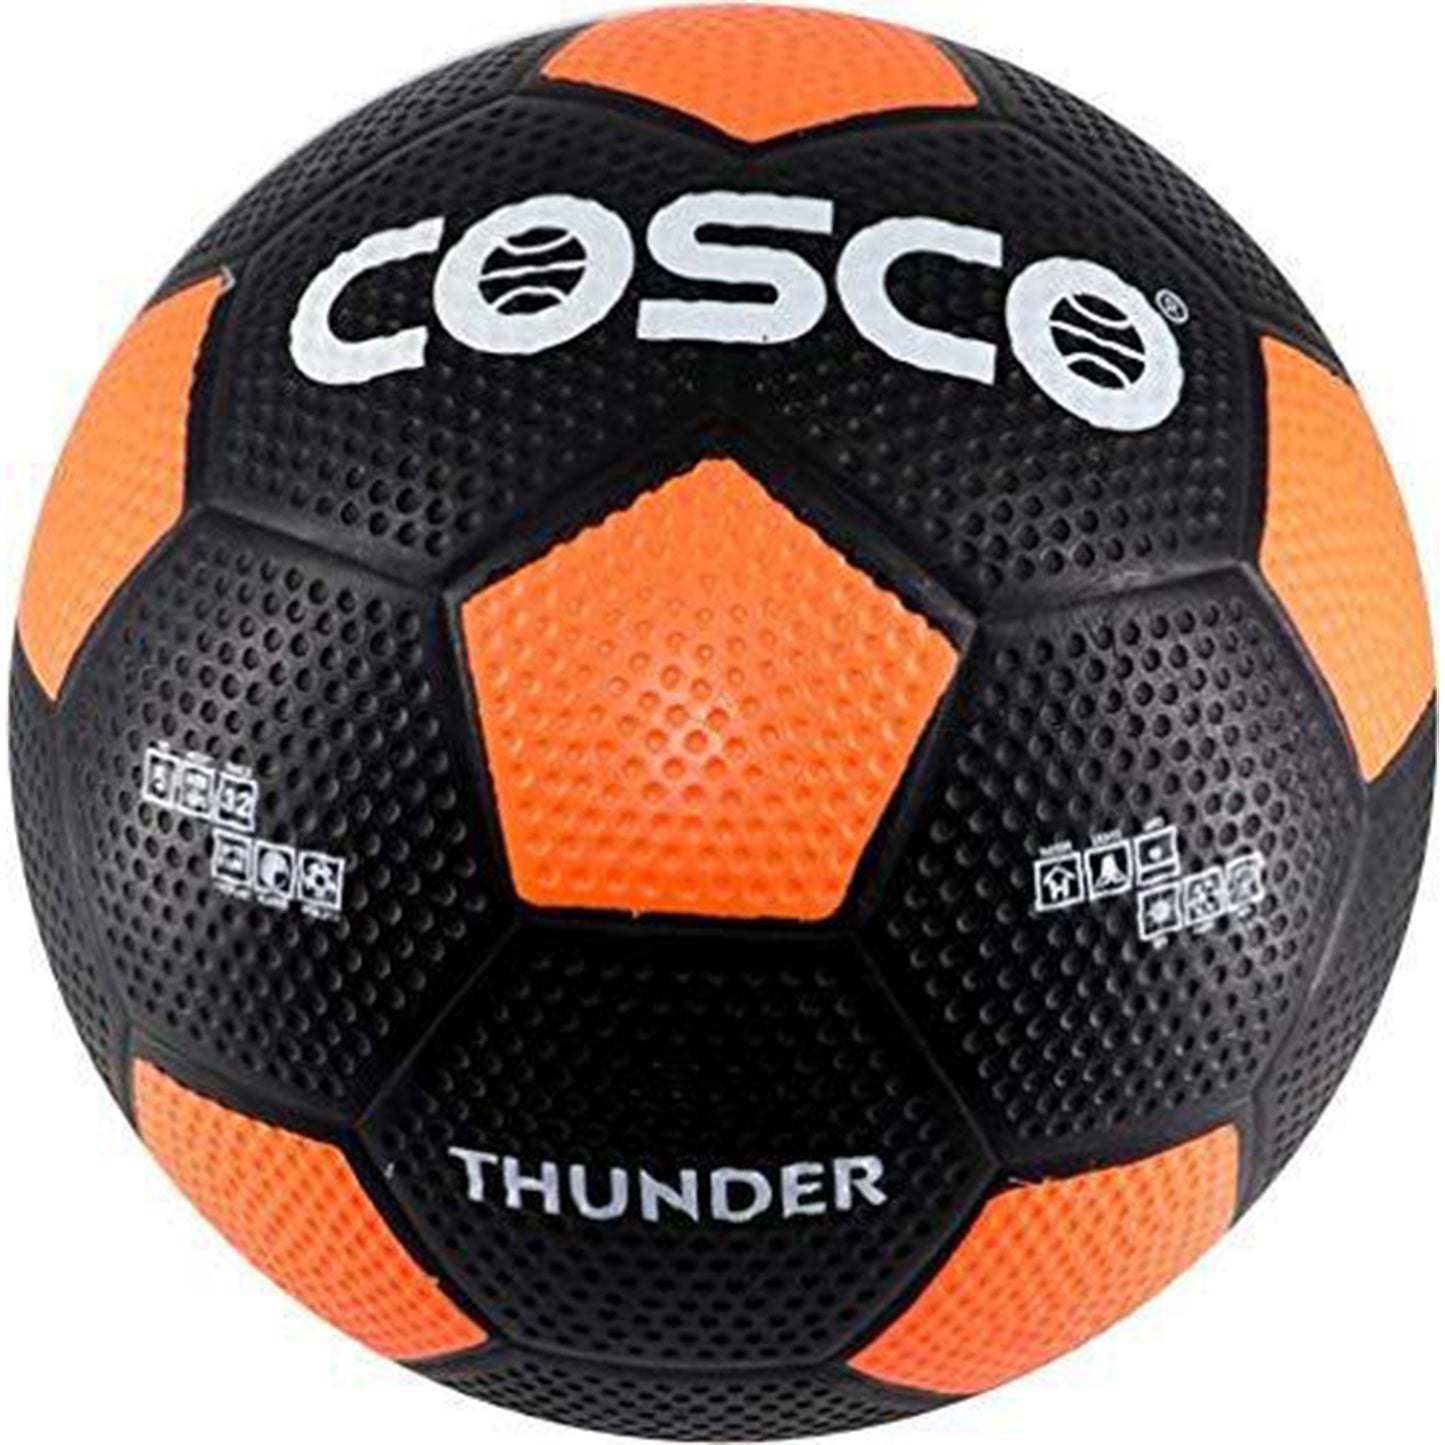 Cosco Thunder Football Size-5 - Best Price online Prokicksports.com